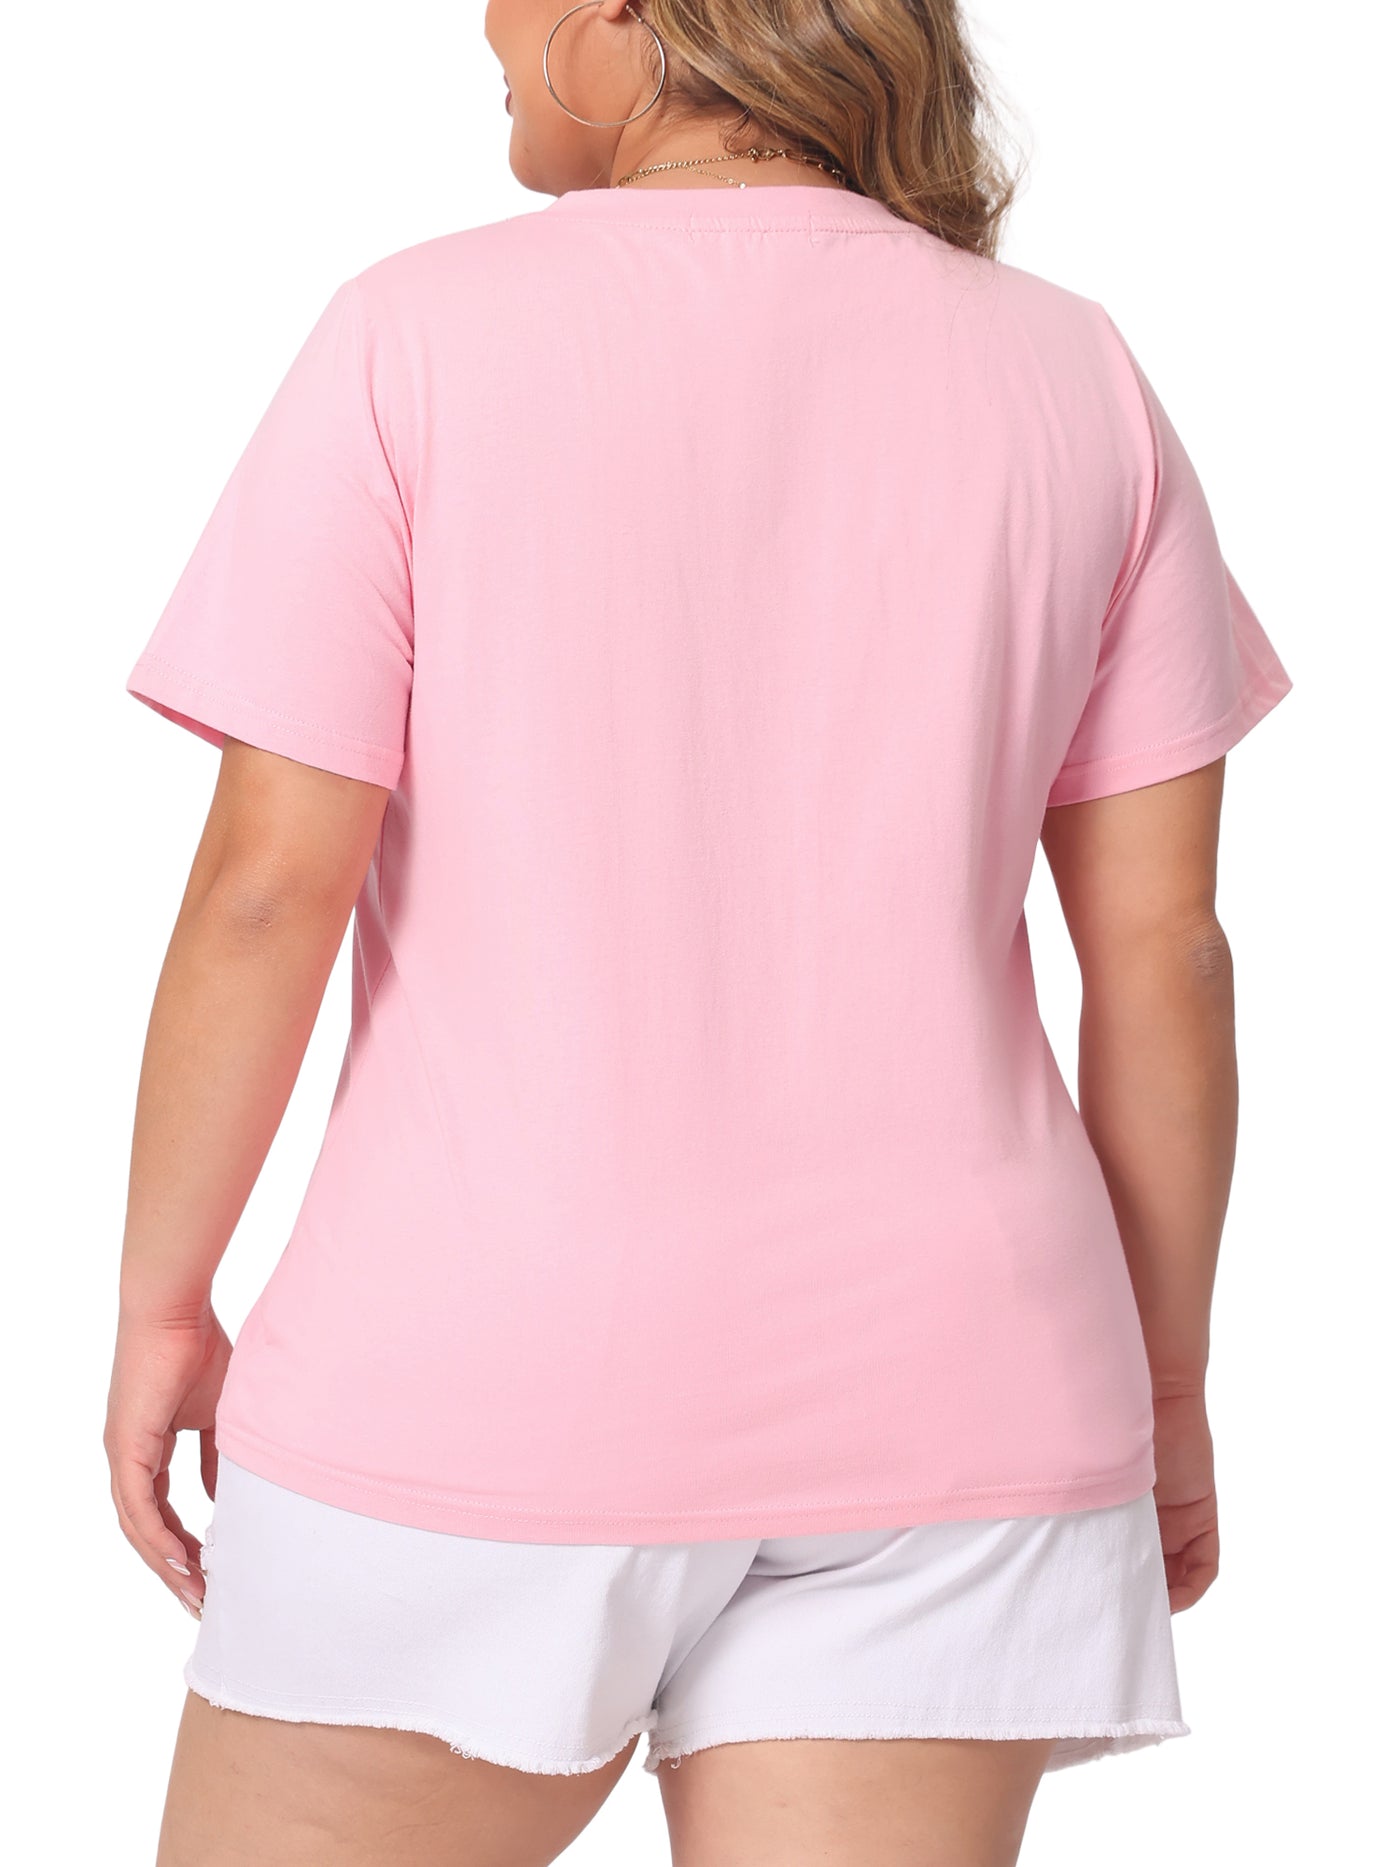 Bublédon Plus Size T Shirts for Women Basic V Neck Short Sleeve Tops